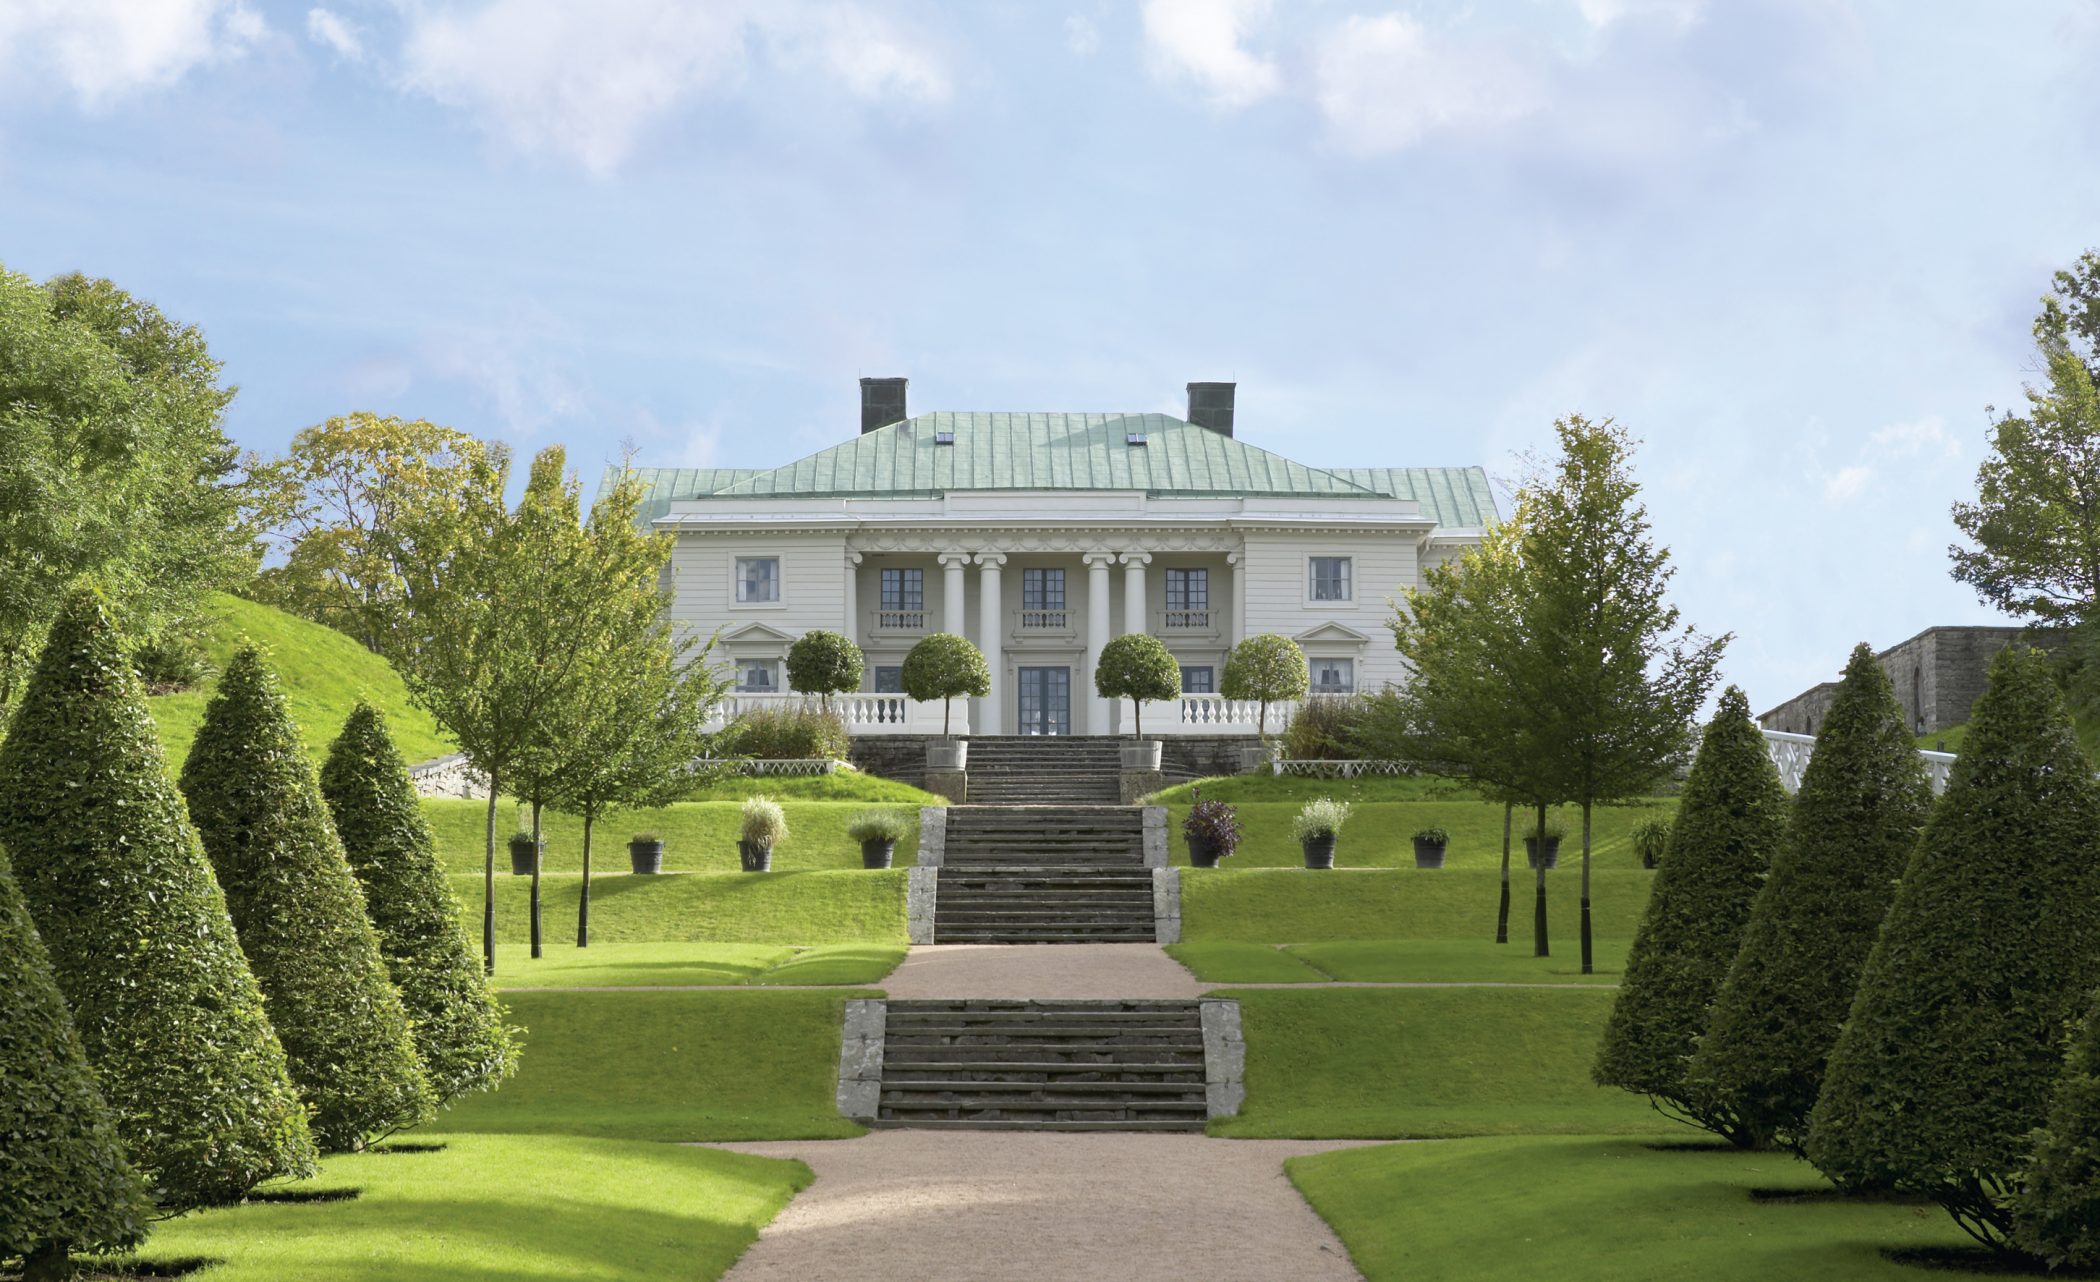 Gunnebo house and gardens, situated 10 kilometres outside Gothenburg,.